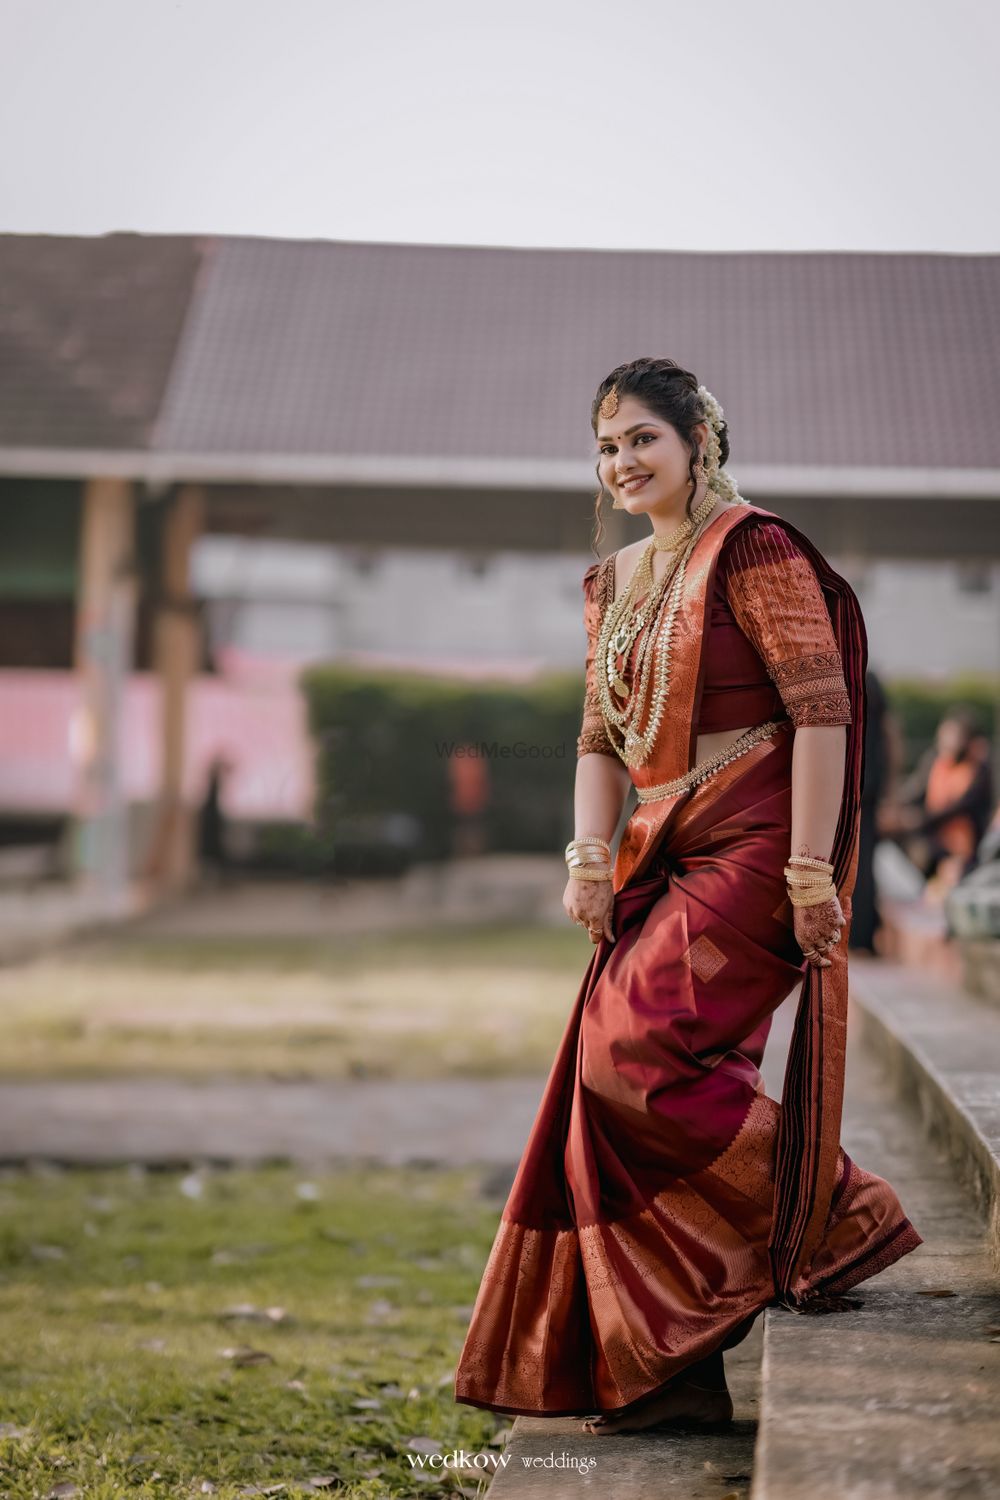 Photo From Varun Lakshmi - By Wedkow Weddings